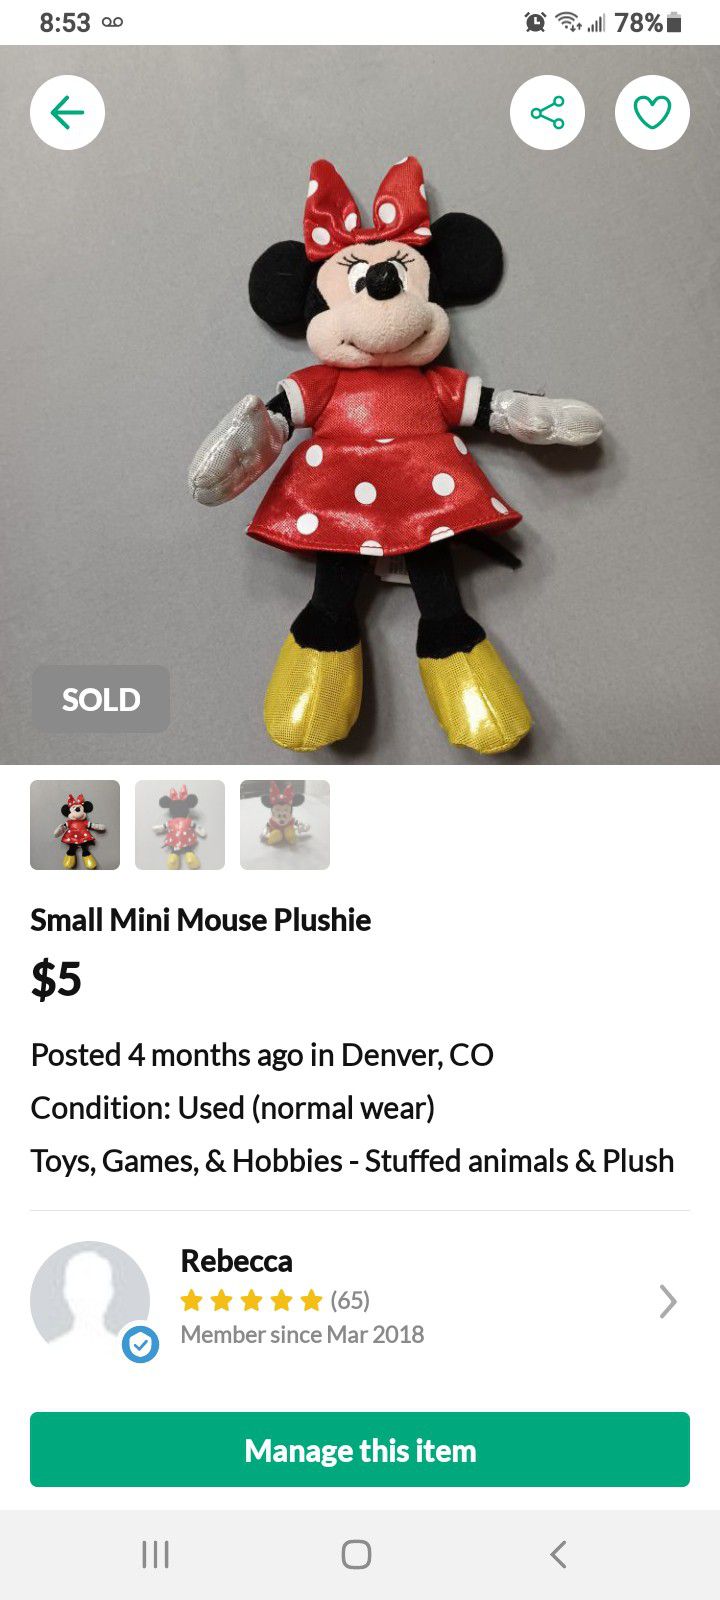 Small Mini Mouse Plushie 